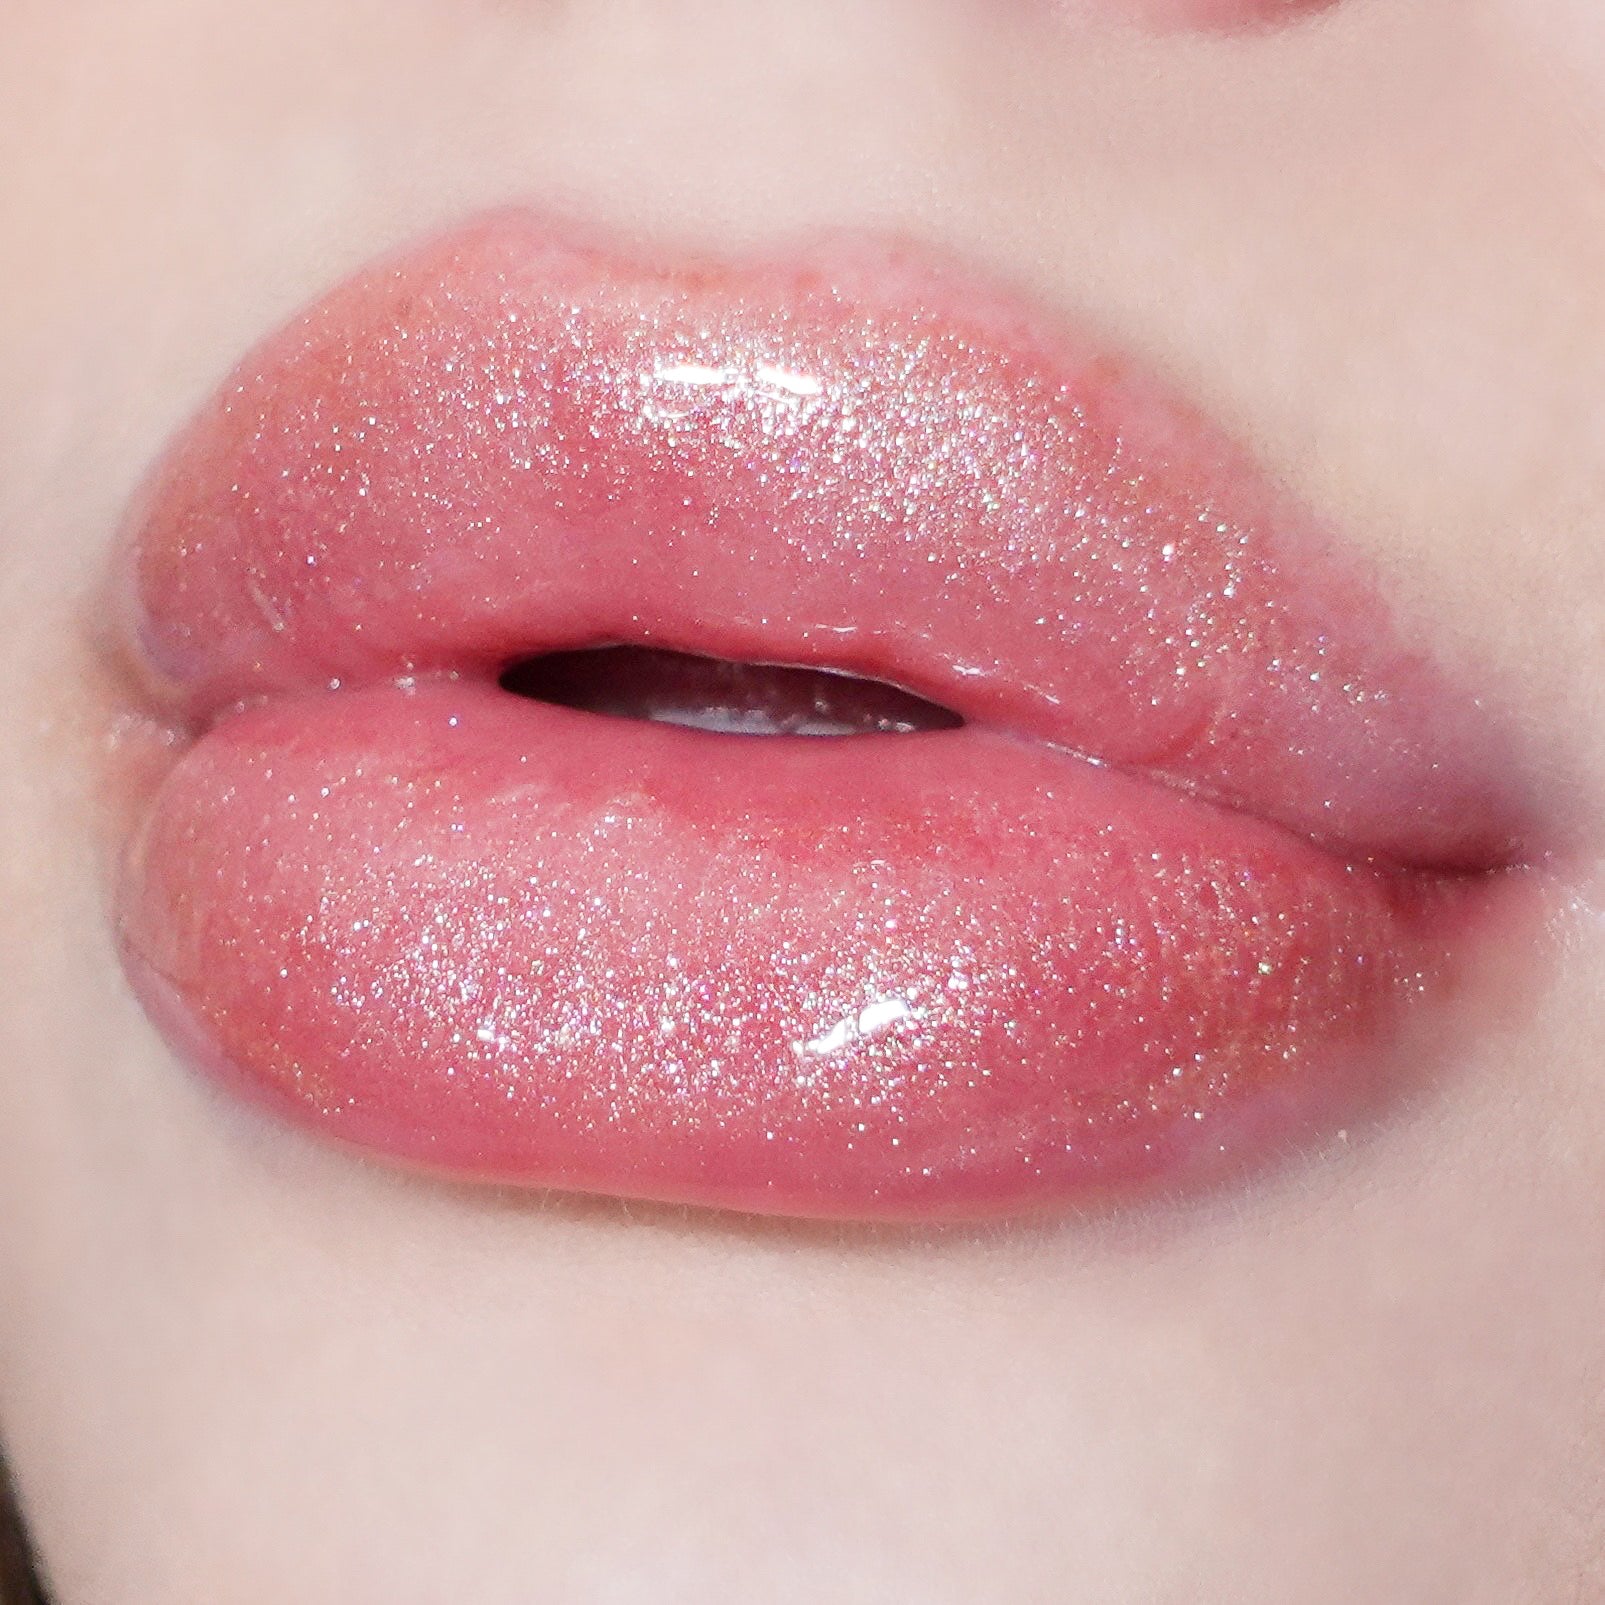 NEXT GEN - LEVEL UP! nourishing lip gloss